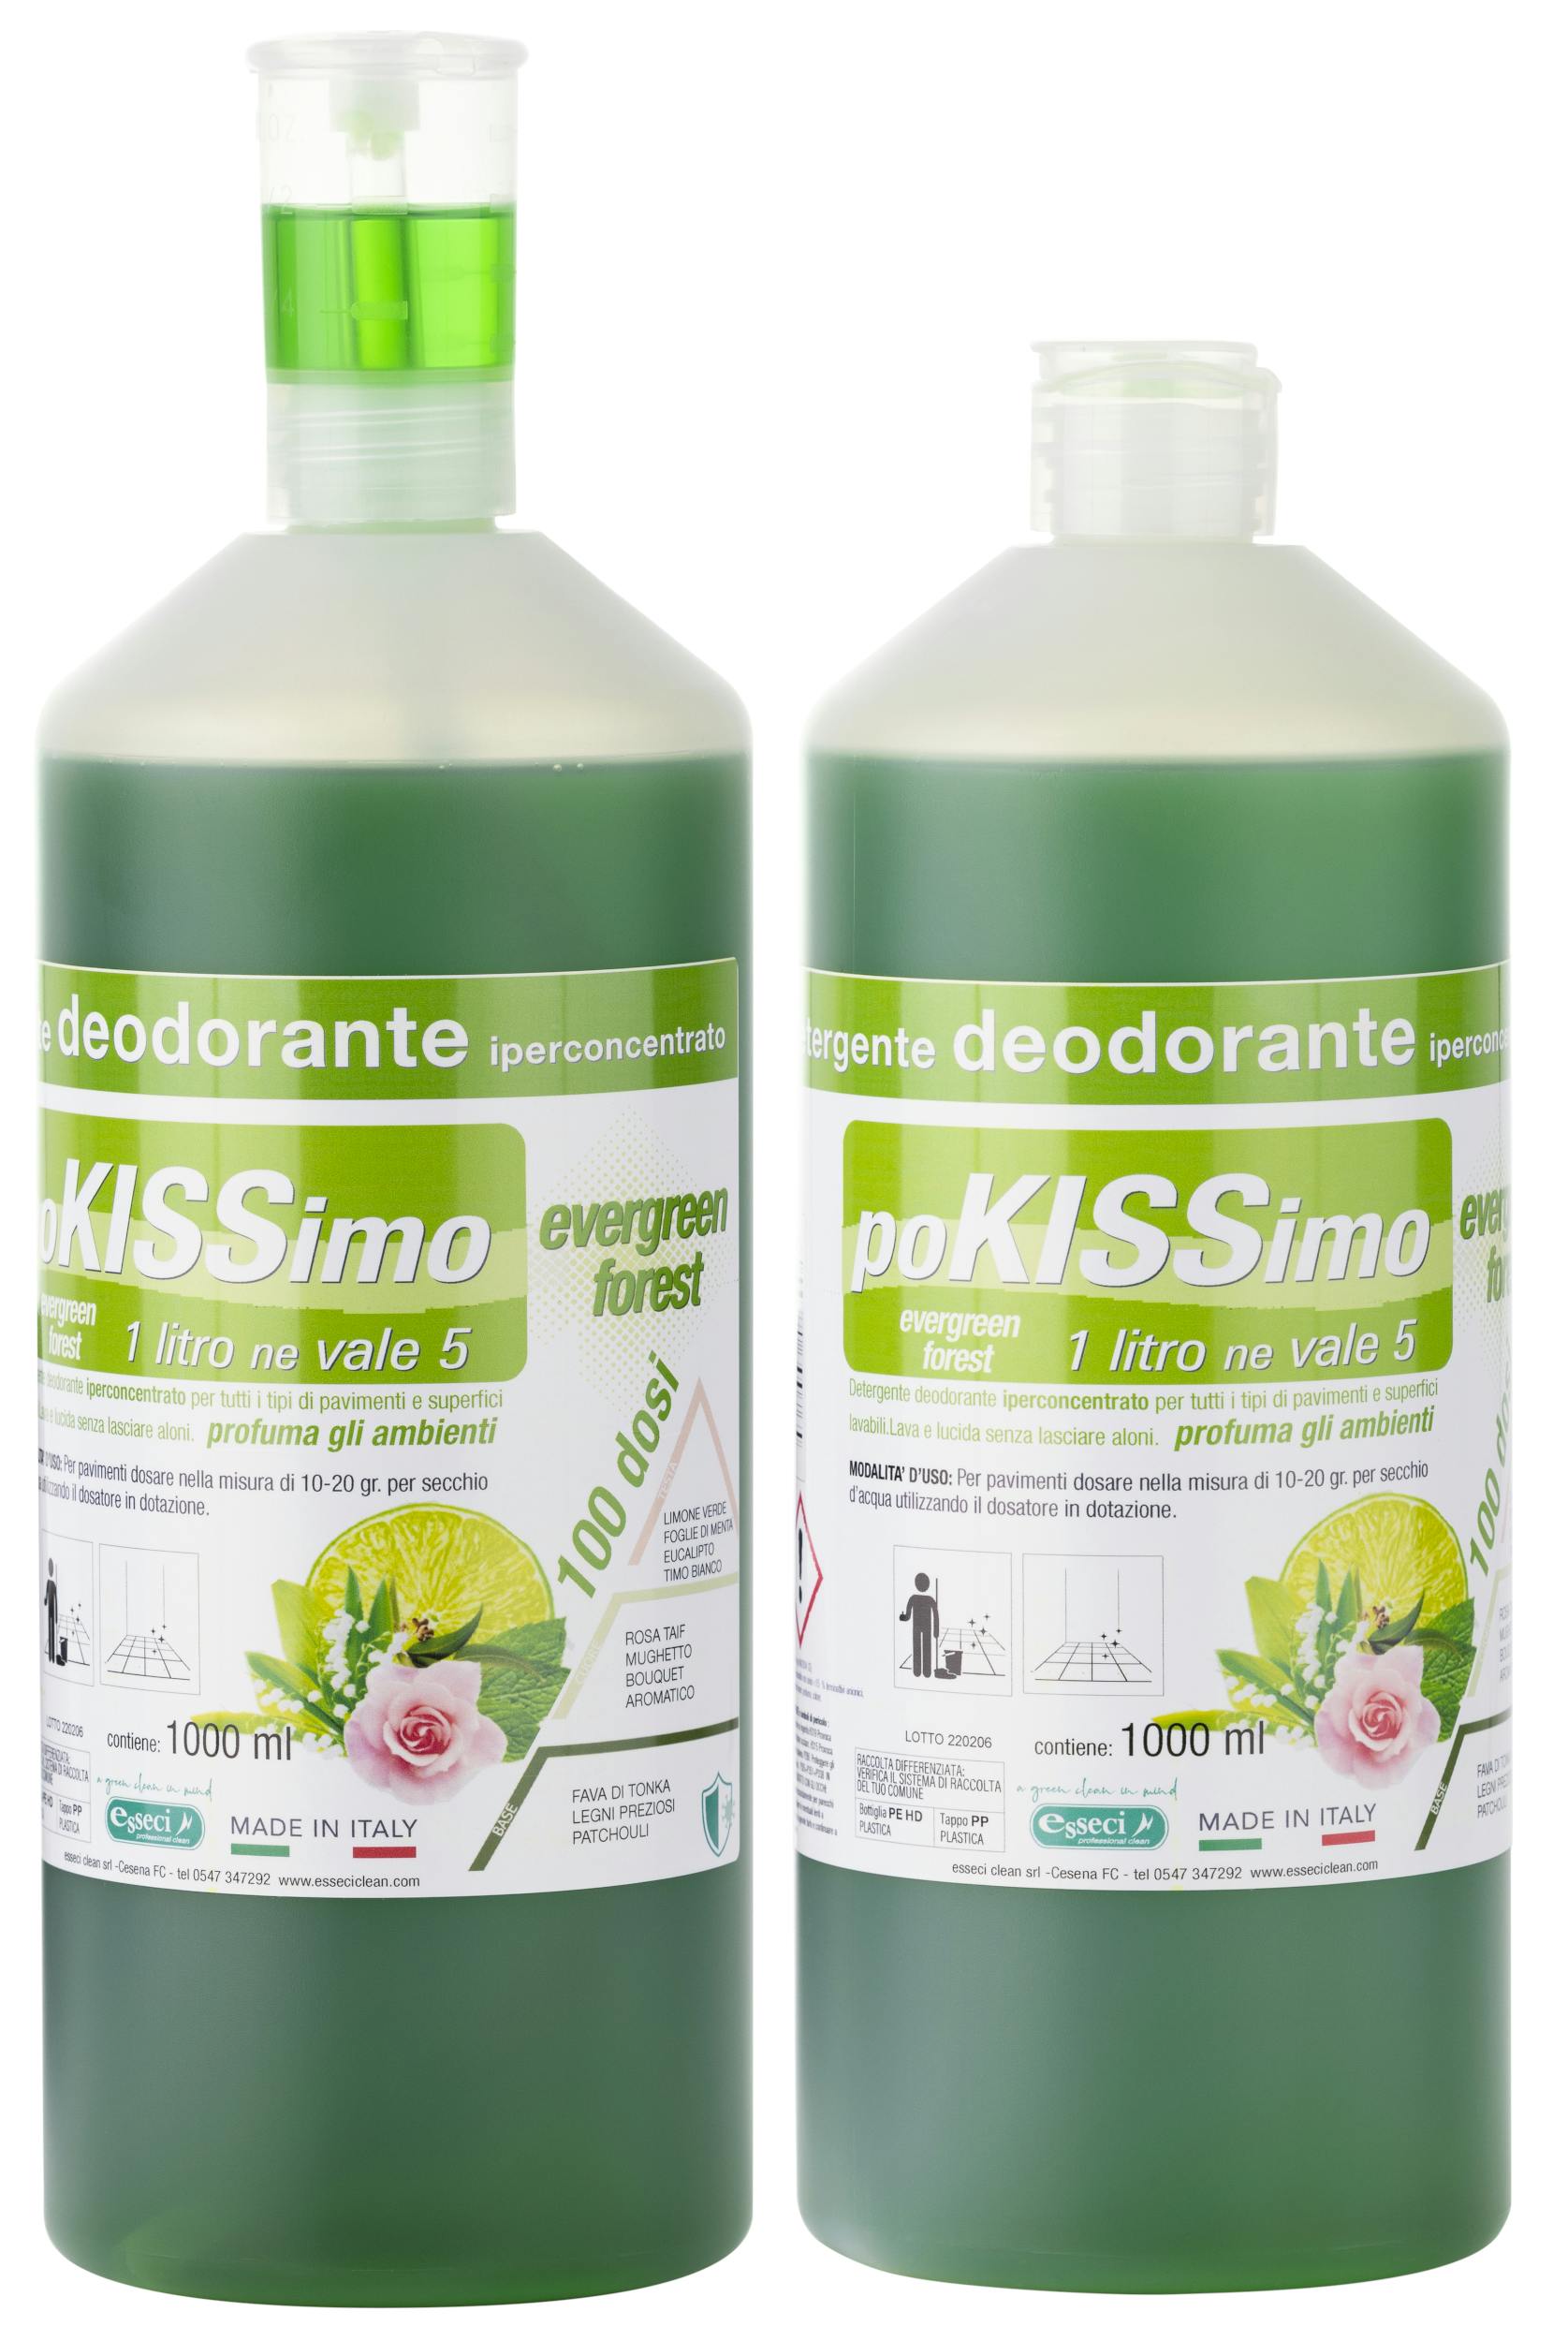 esseci clean pokissimo 1000ml evergreen forest detergente deodorante  iperconcentrato